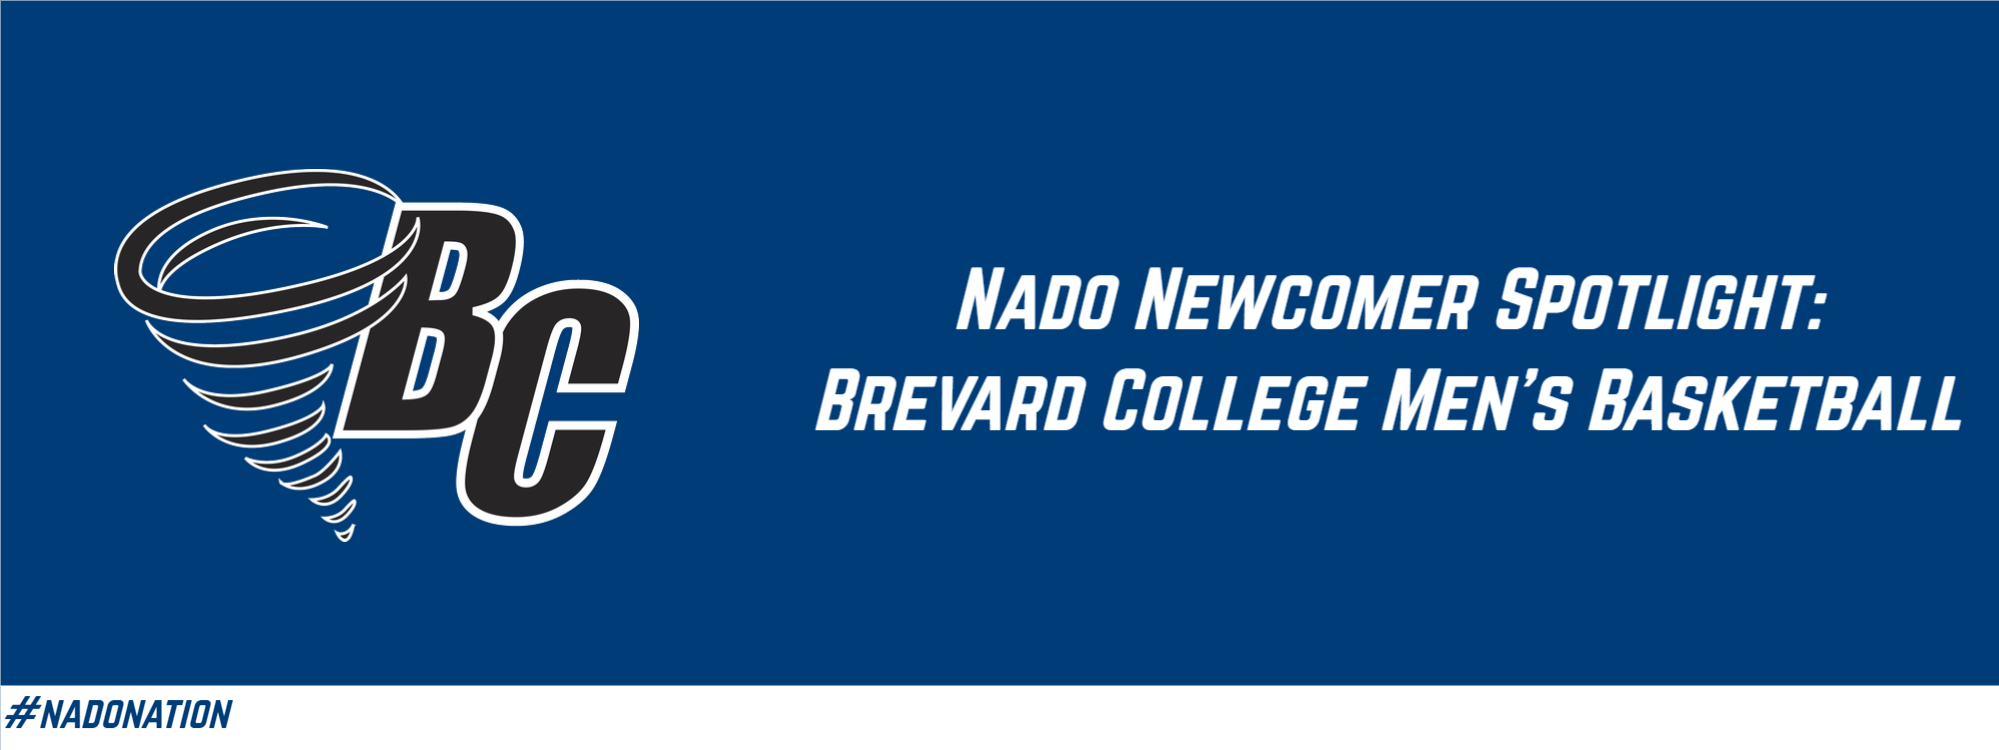 Nado Newcomer Spotlight: Men’s Basketball Welcomes 17 to 2020-21 Squad